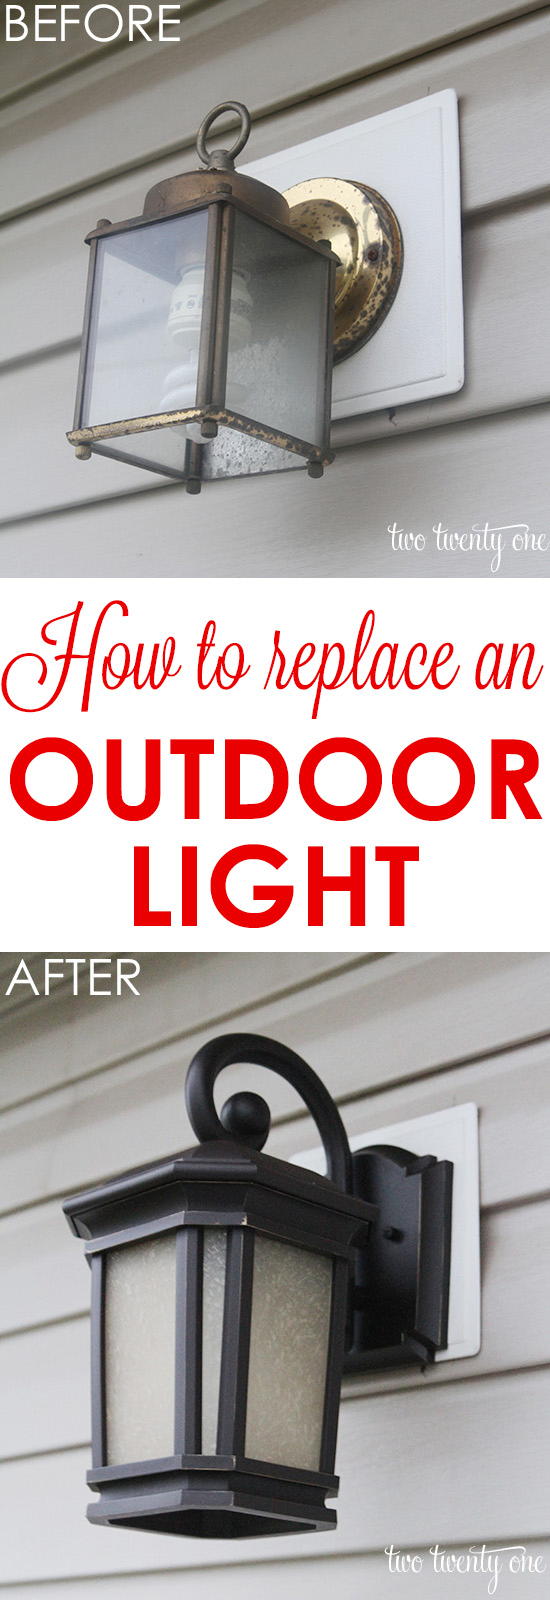 21 Replace or Upgrade Outdoor Lights Simphome com